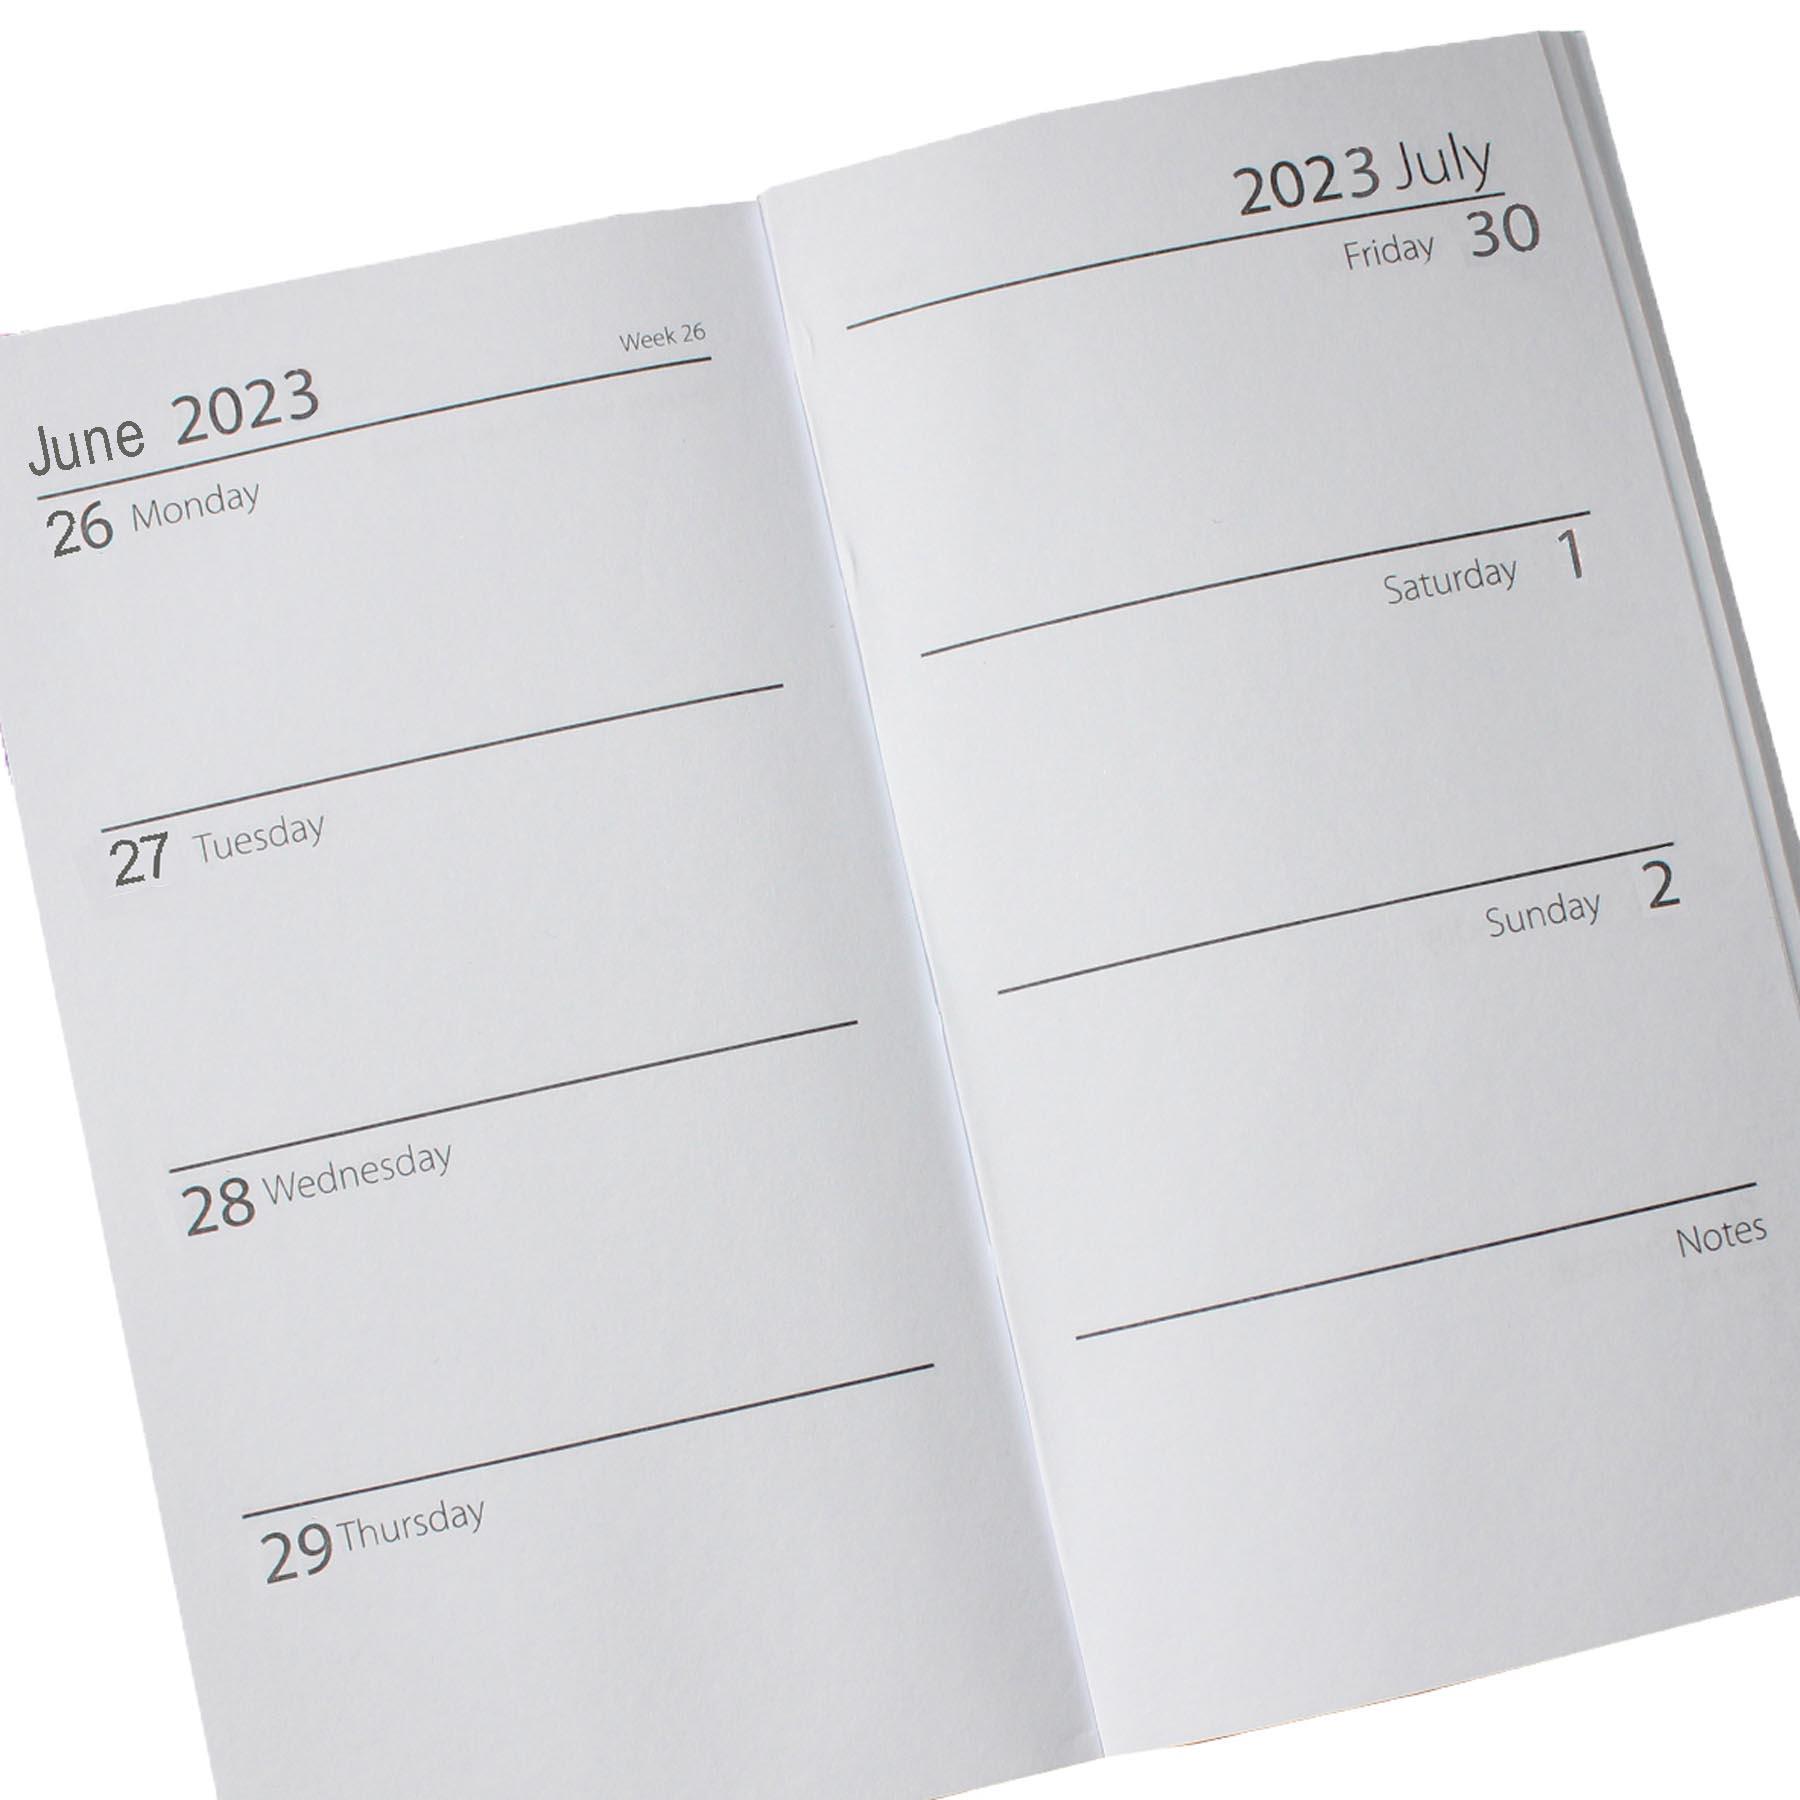 2022 - 2023 Slimline Academic Student Diary Padded Cover 3878 - Purple Glitter